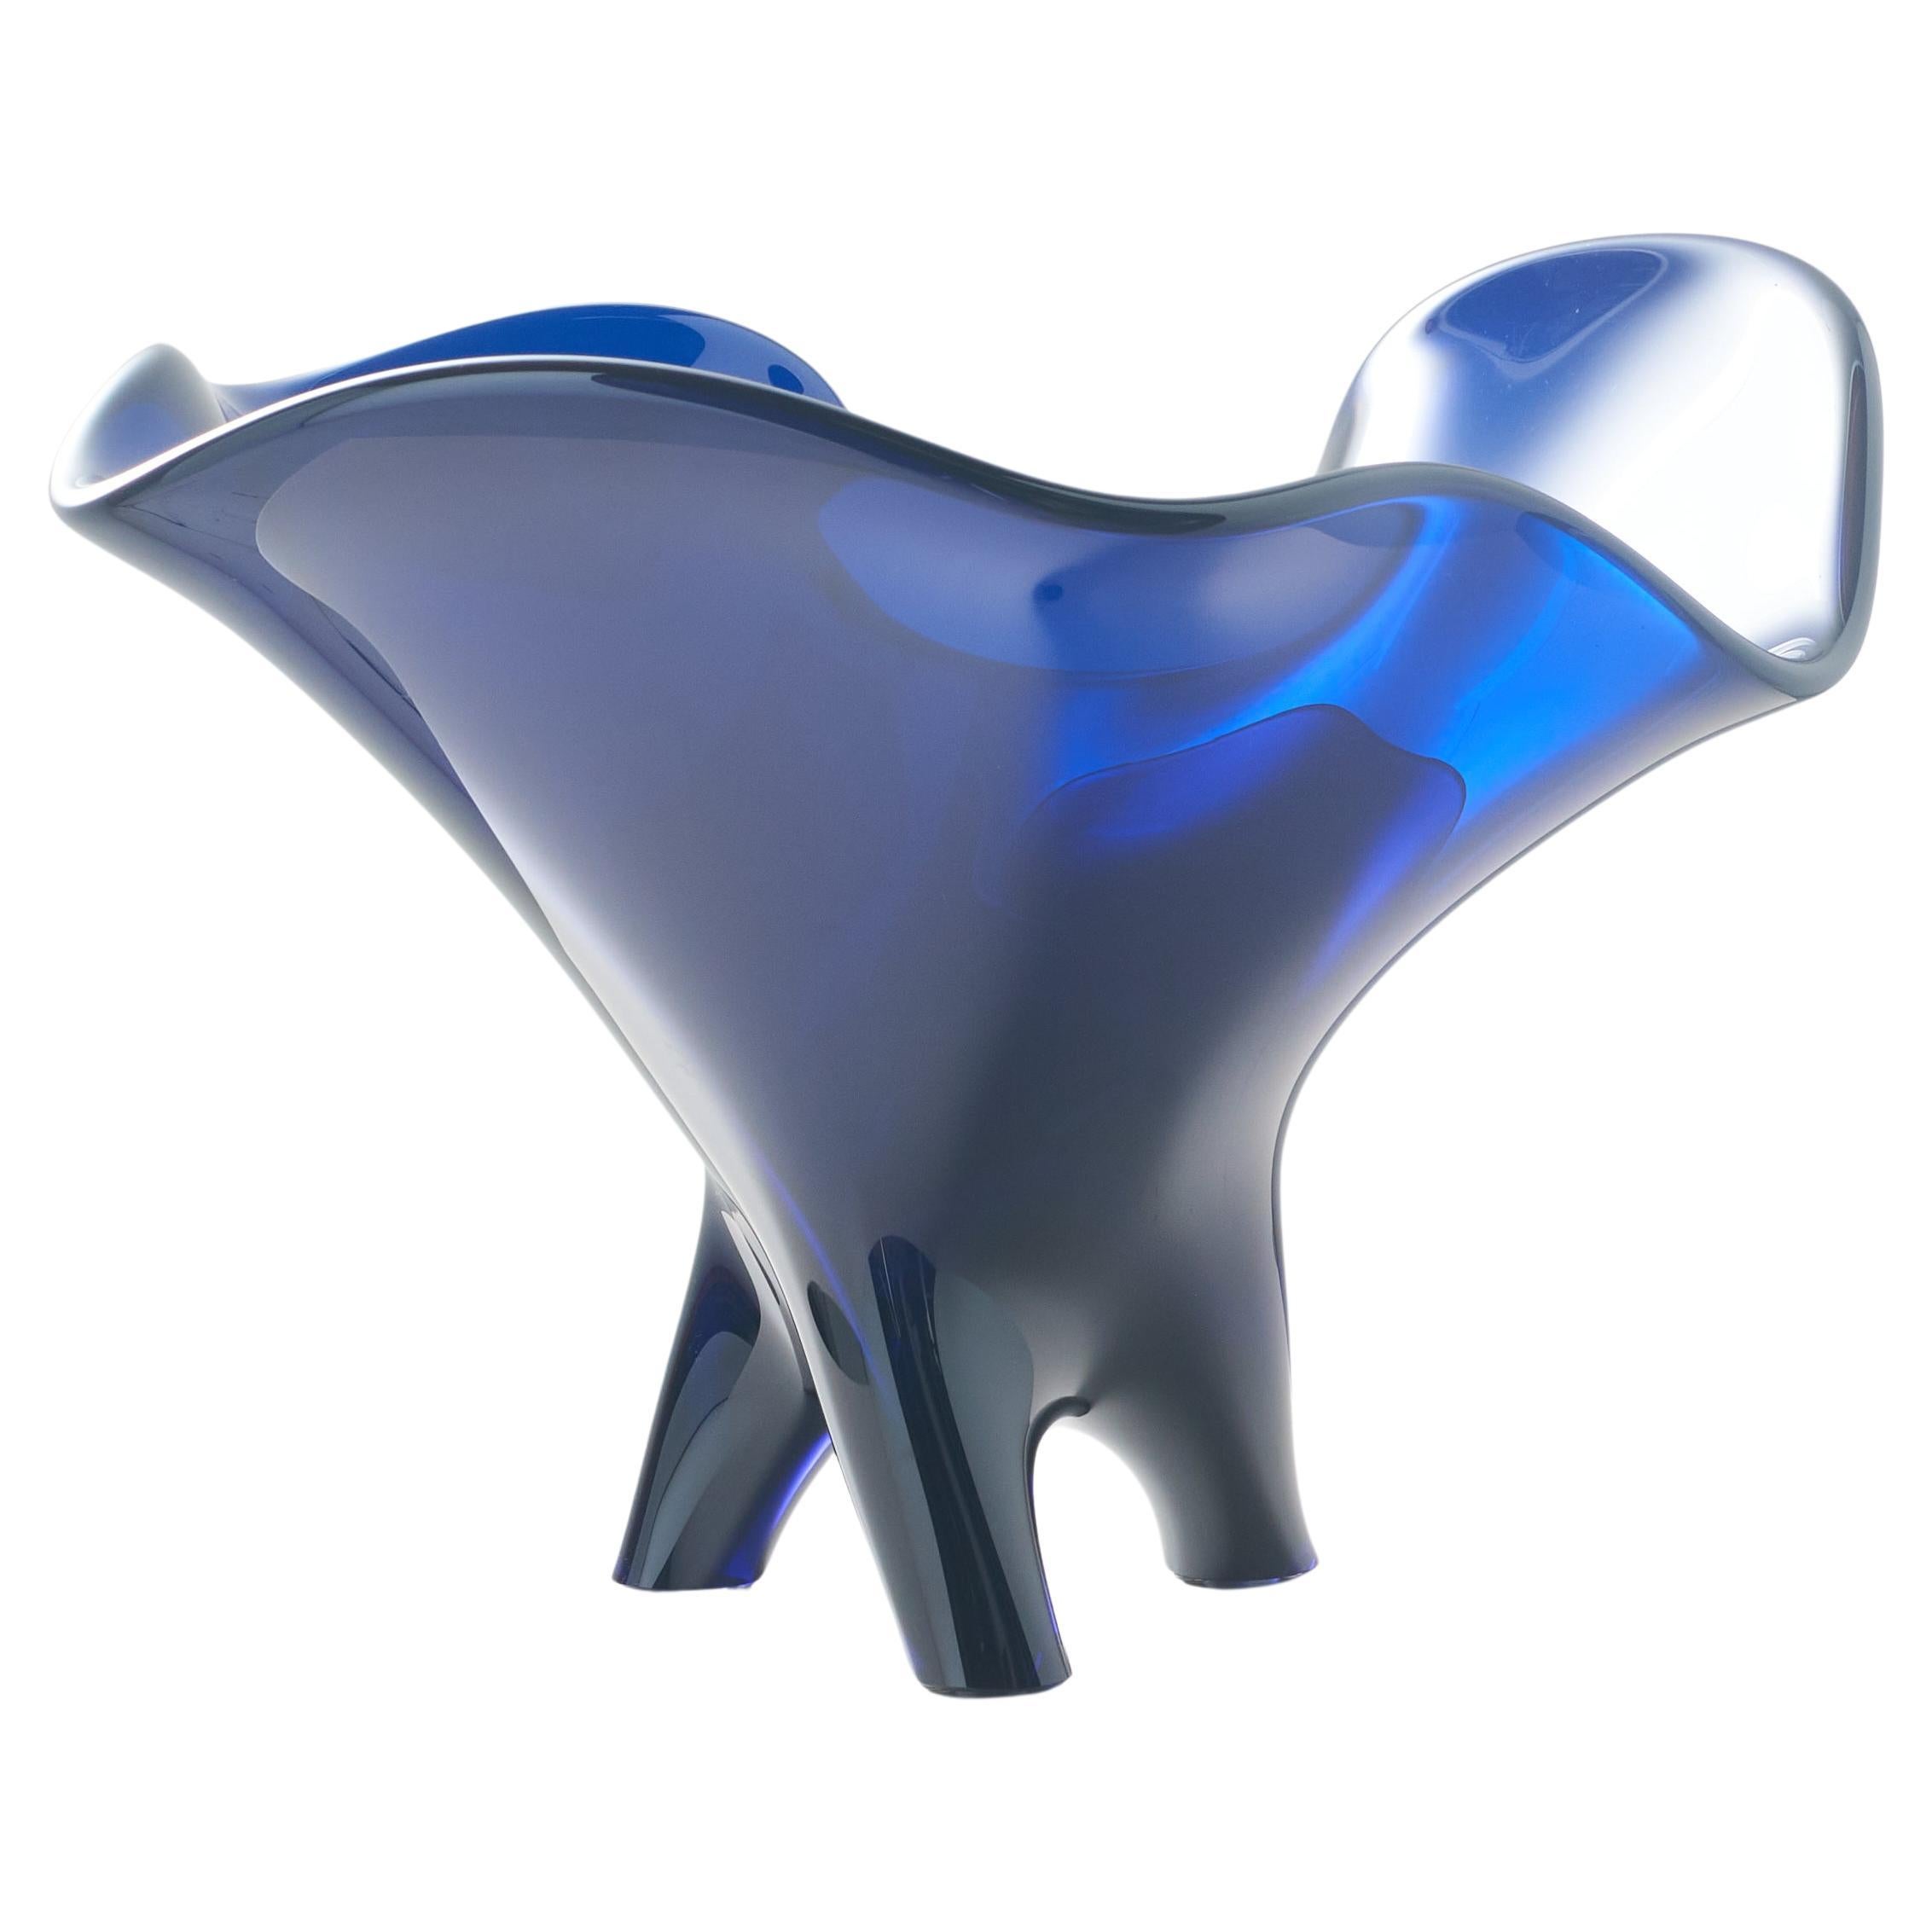 Unique Tornado blue glass bowl by Allan Scharff For Sale